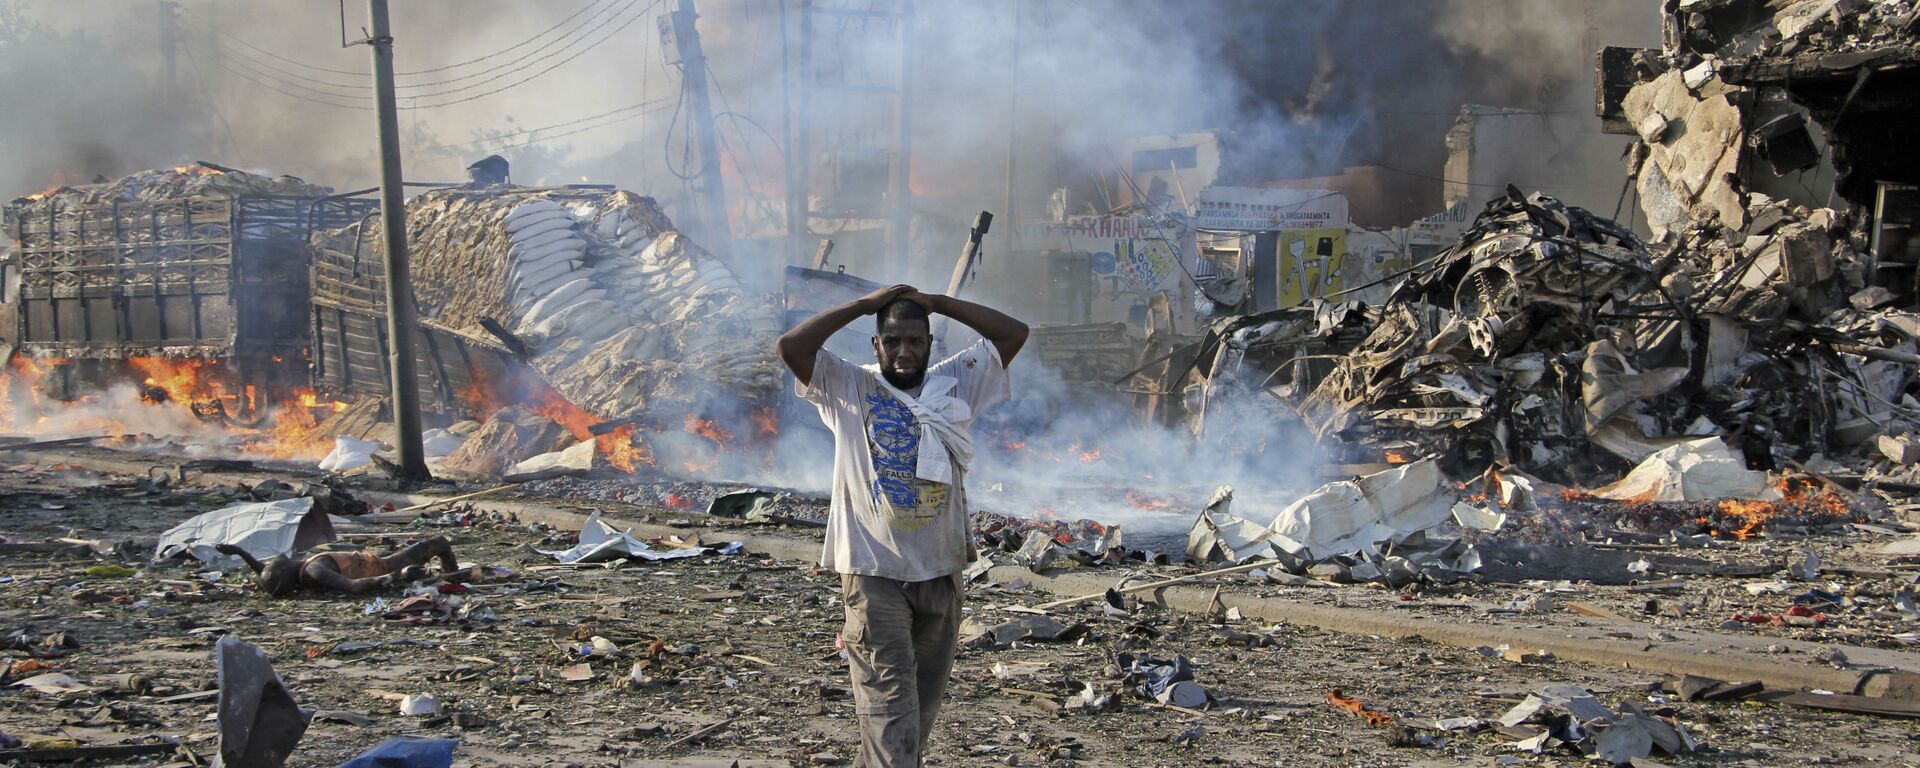 Последствия взрыва в центре Могадишо, Сомали - 俄羅斯衛星通訊社, 1920, 24.07.2021